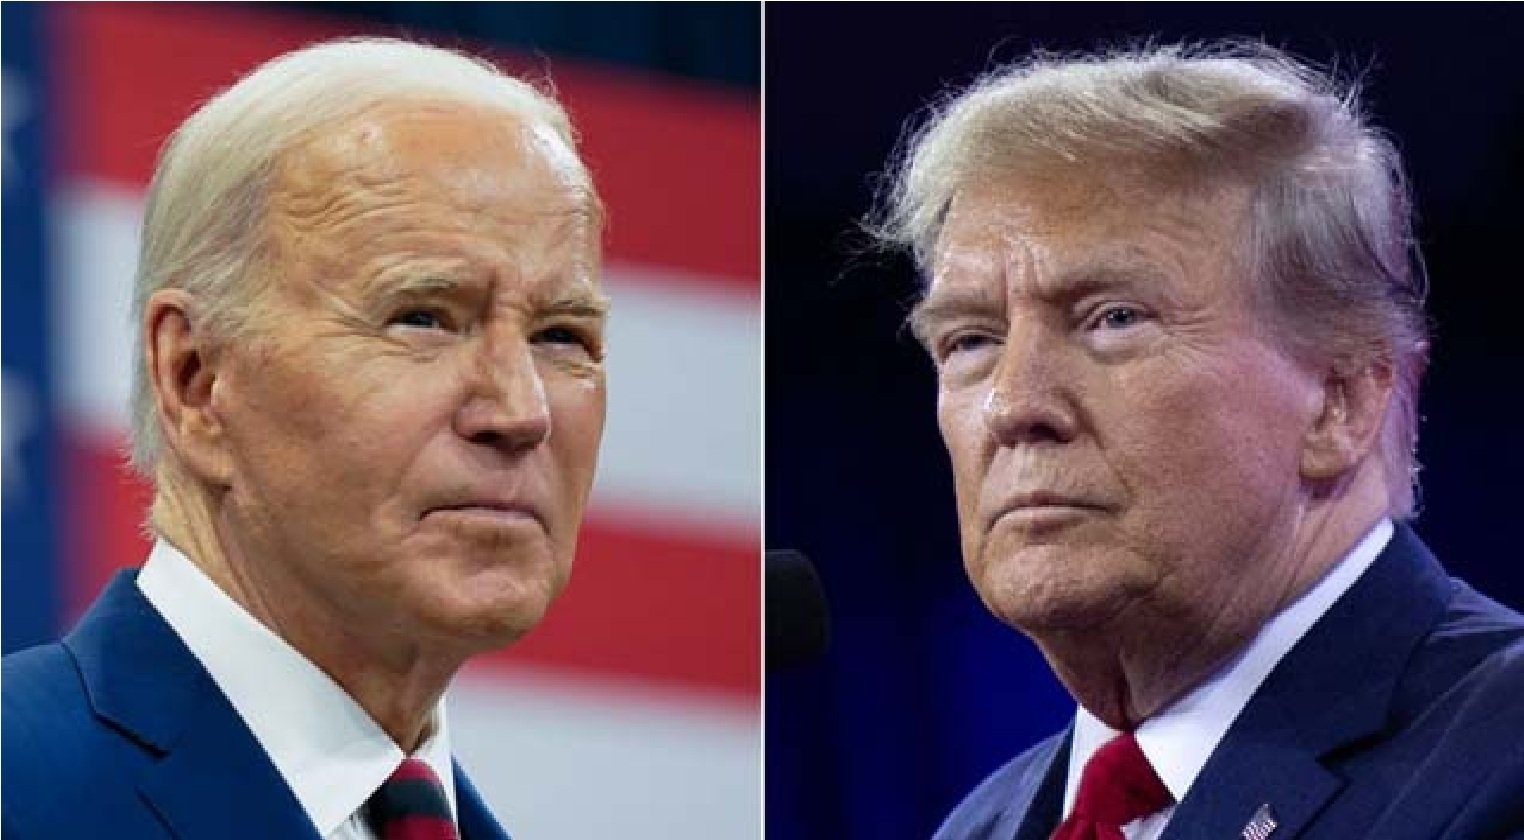 Democrats scramble to limit damage after Biden's wobbly debate showing against Trump